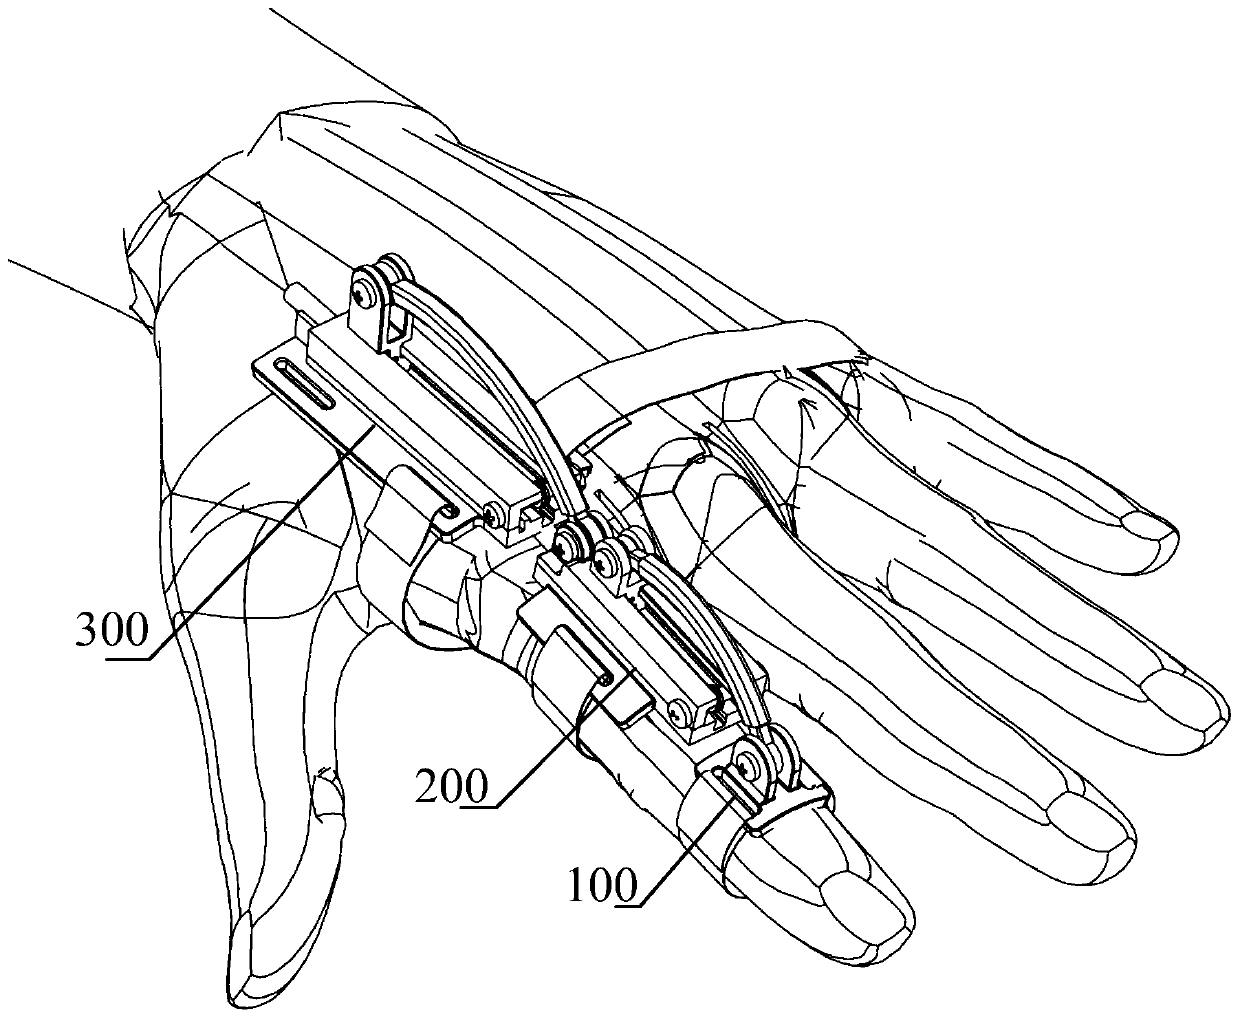 Hand exoskeleton mechanism and robot